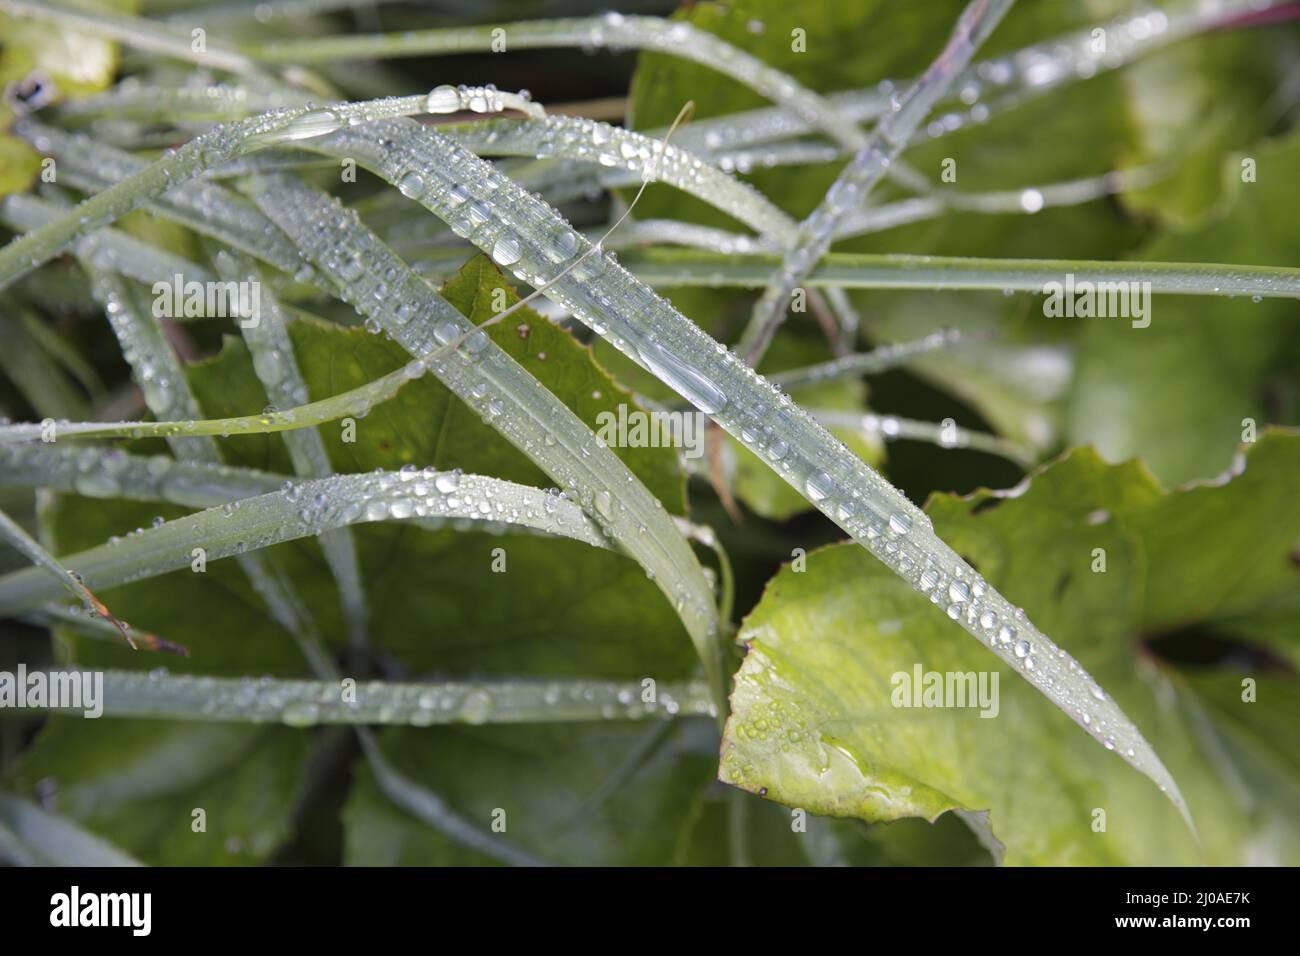 Wet grass Stock Photo